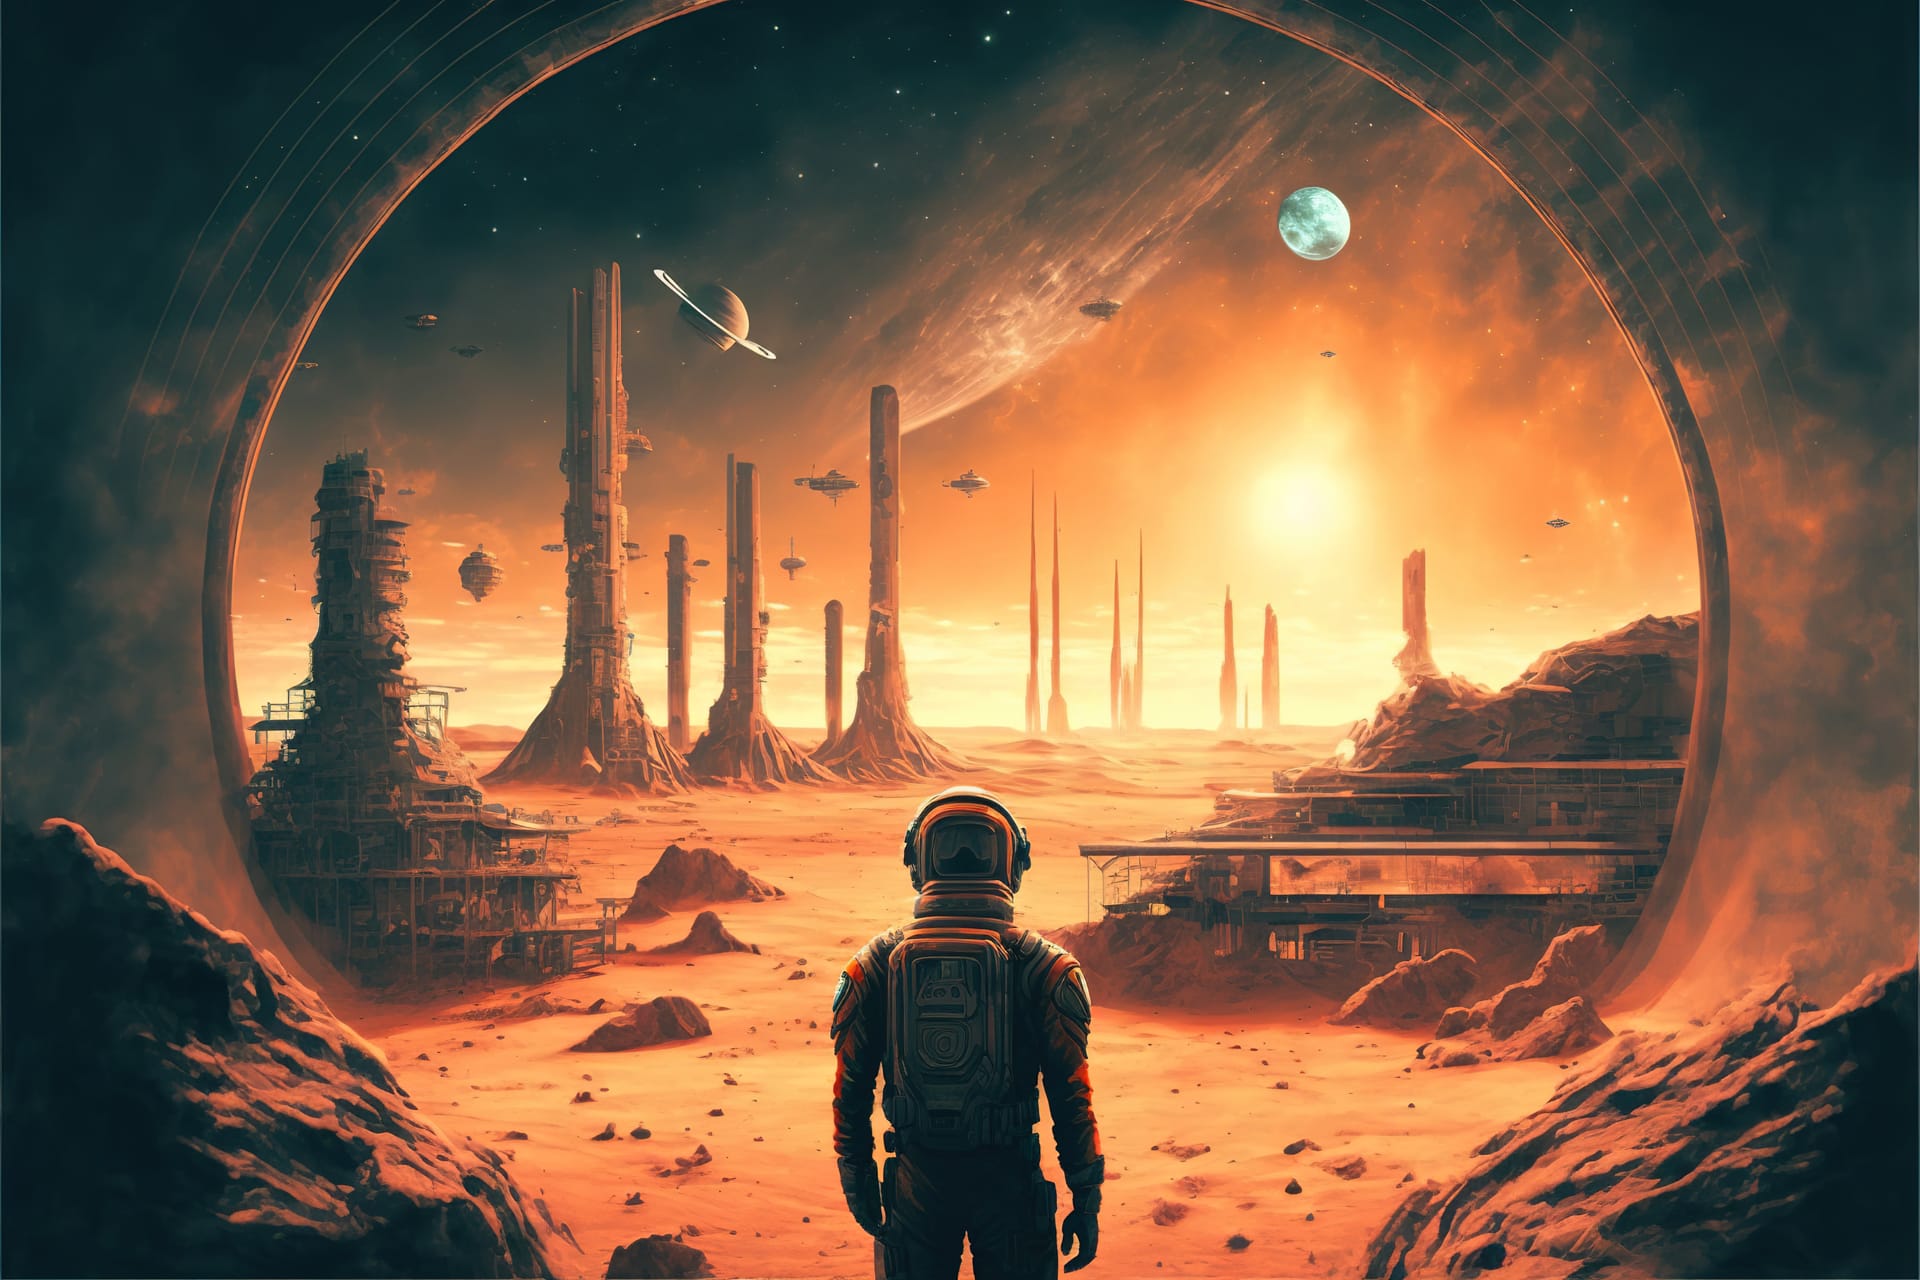 Alien planet digital art style illustration painting fantasy concept astronaut